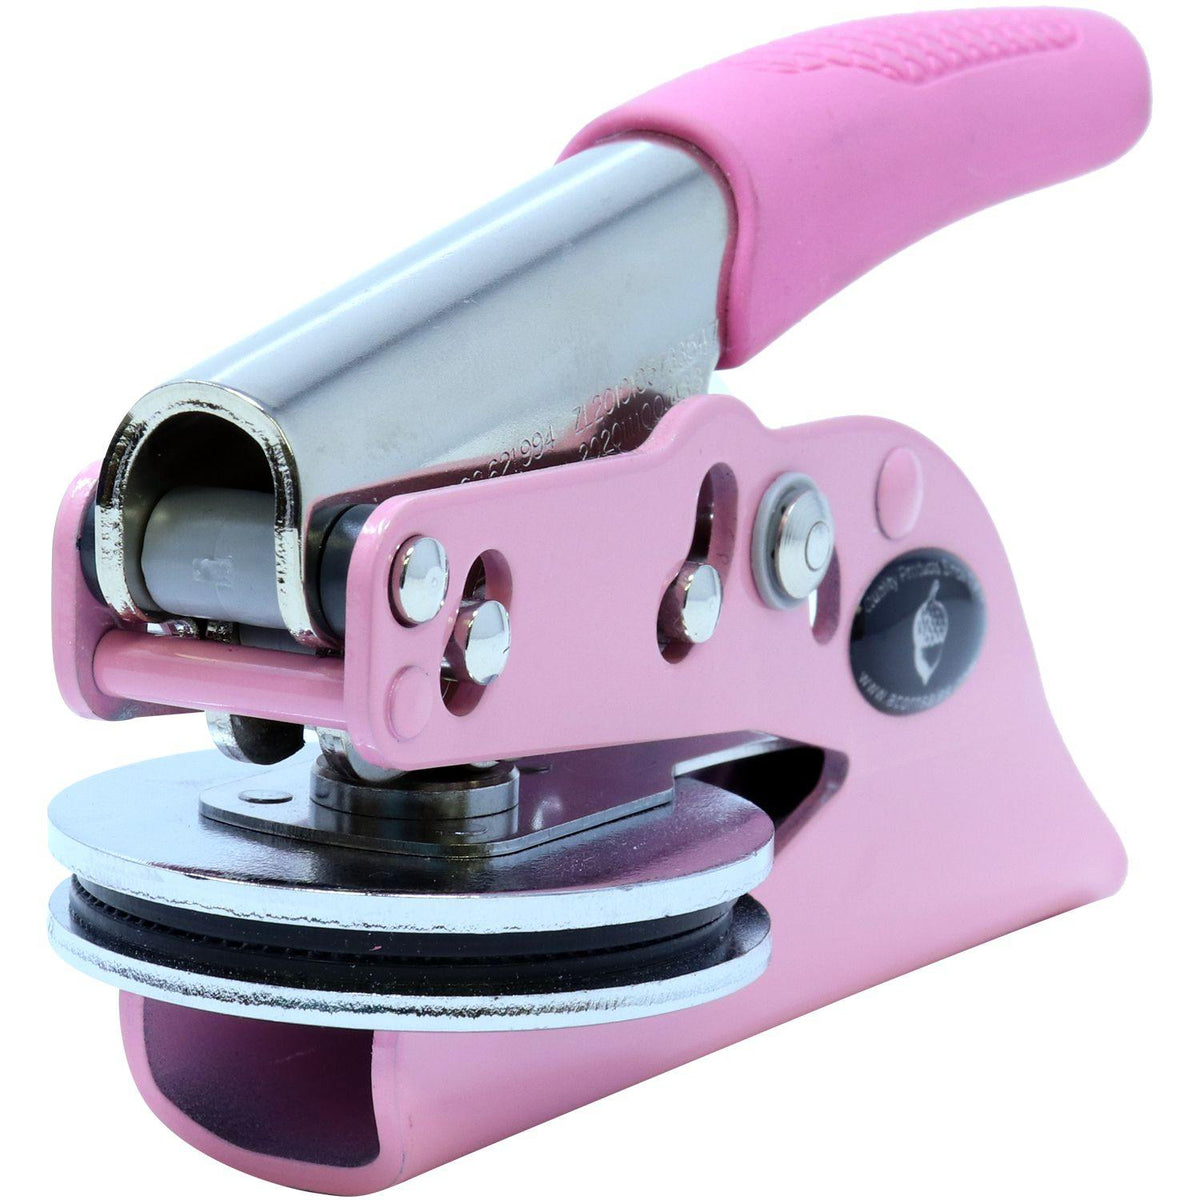 Public Weighmaster Pink Soft Seal Embosser - Engineer Seal Stamps - Embosser Type_Handheld, Embosser Type_Soft Seal, Type of Use_Professional